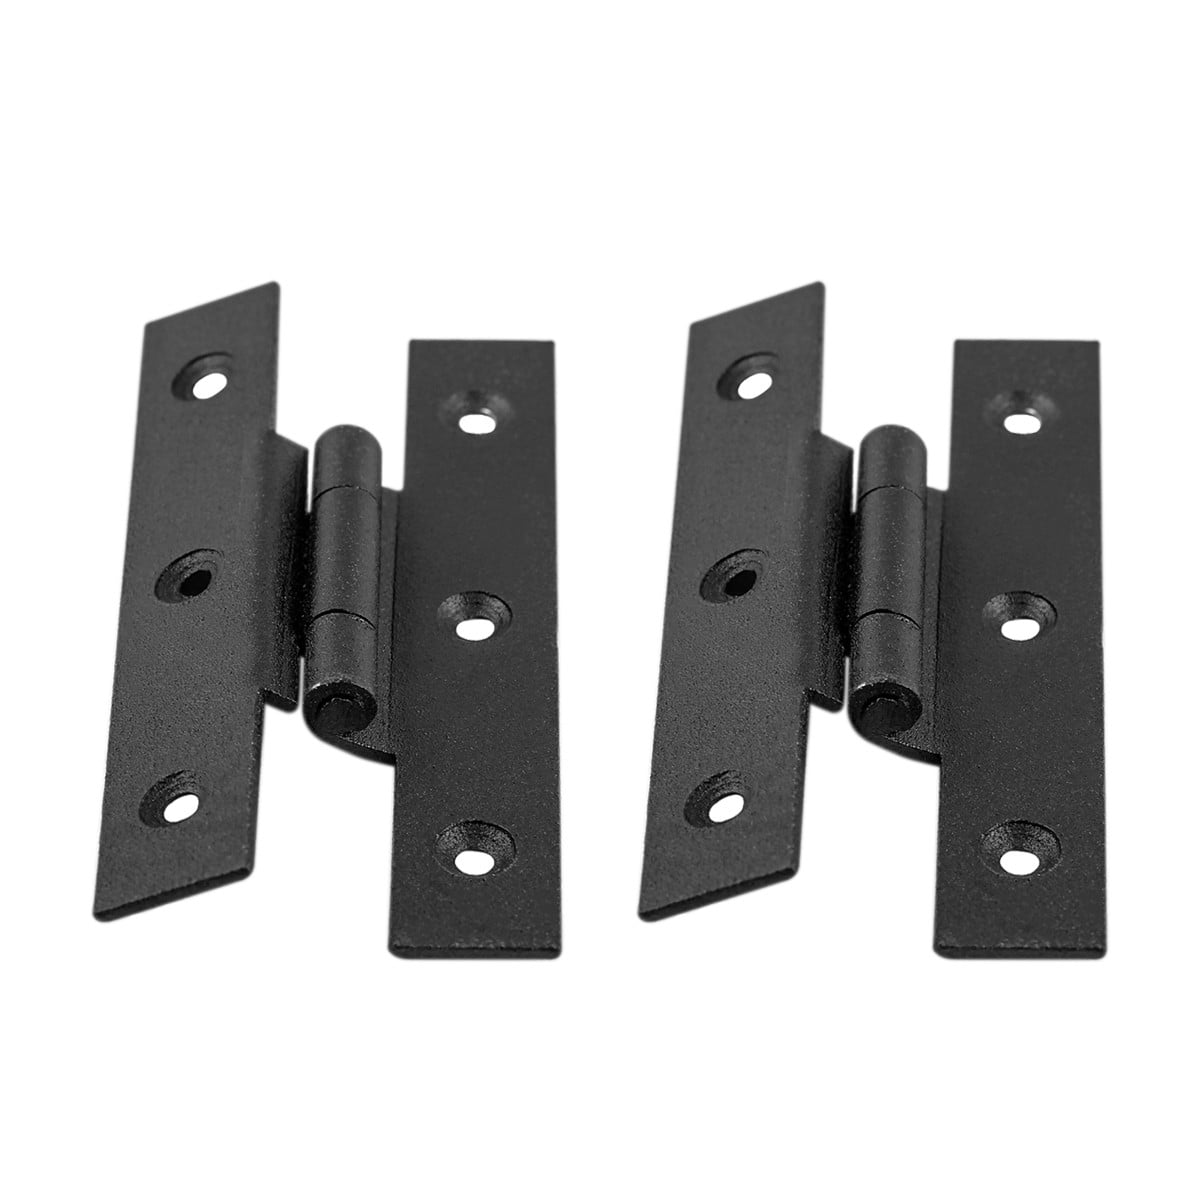 Stainless Steel 6 Hole Door Hinges with Screws 1.3 x 1.75 in, 30 Pack 